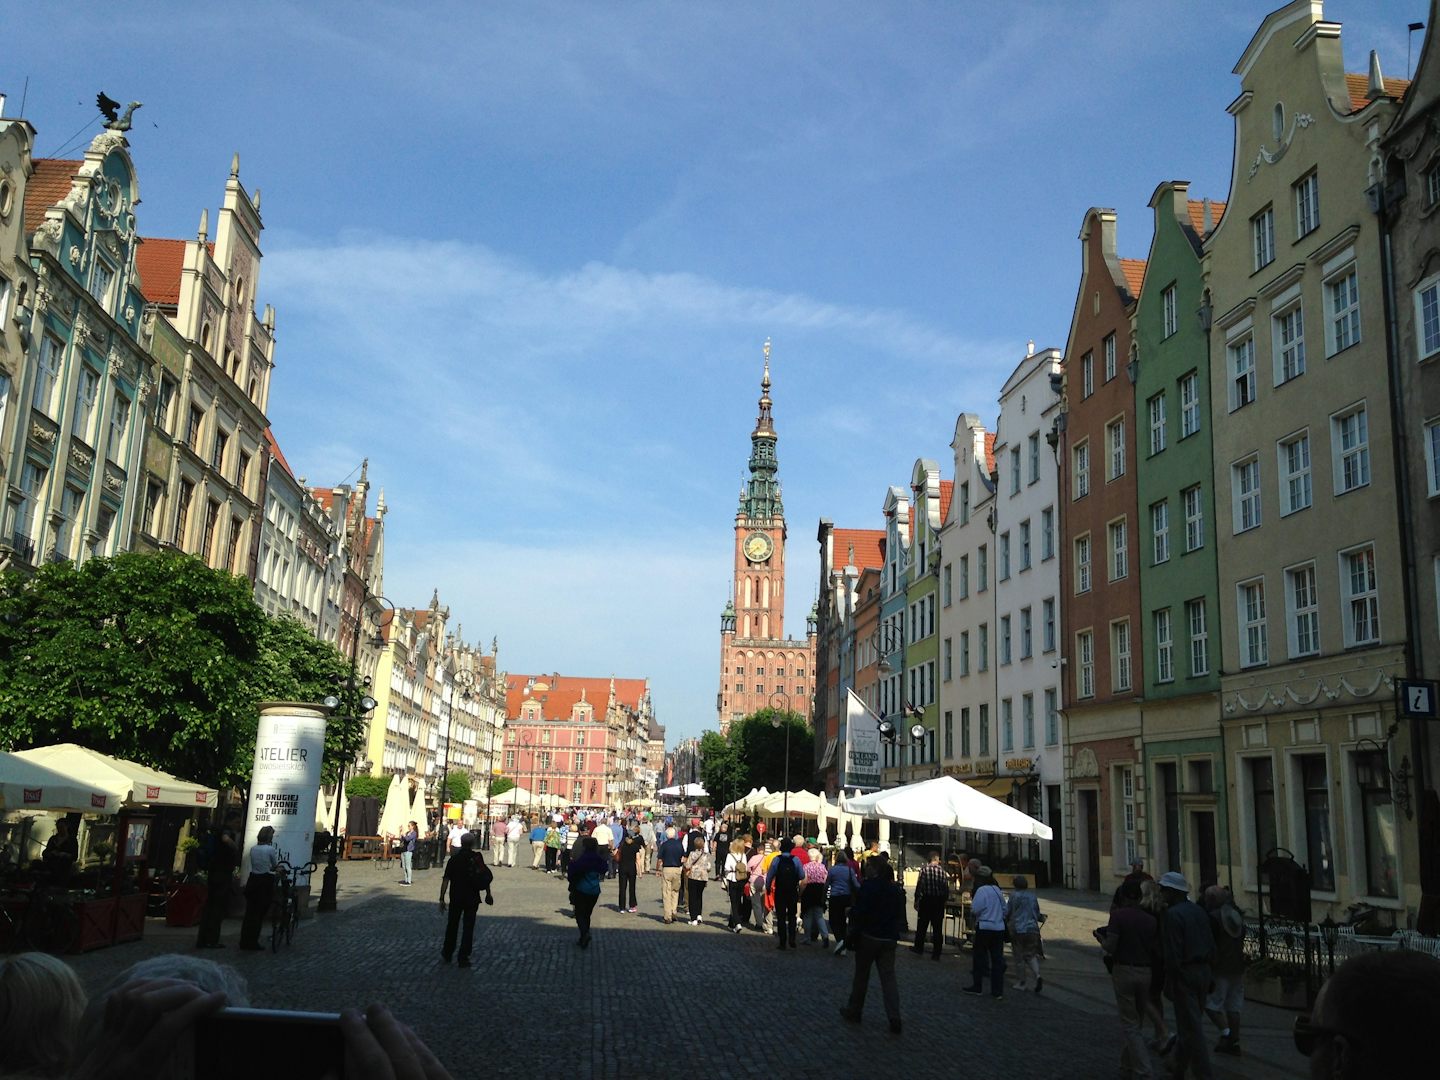 Sunday morning in Gdansk, Poland